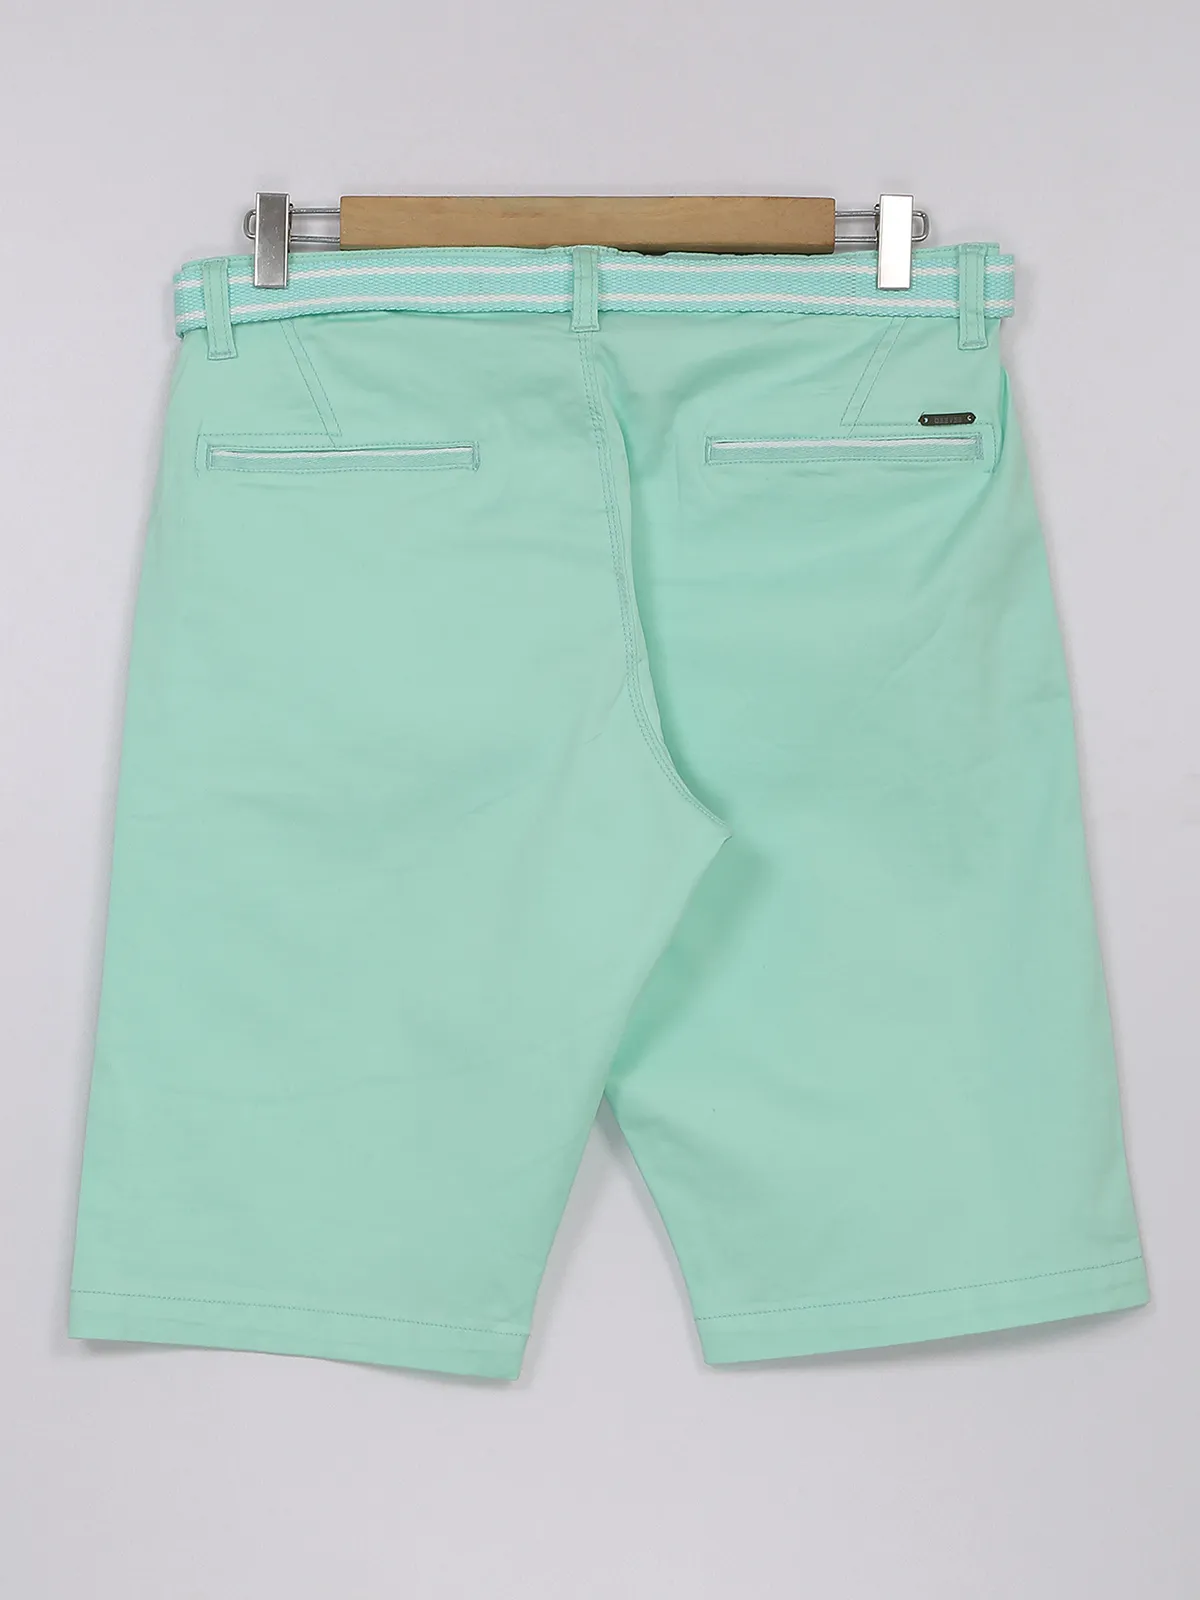 Beevee green solid shorts